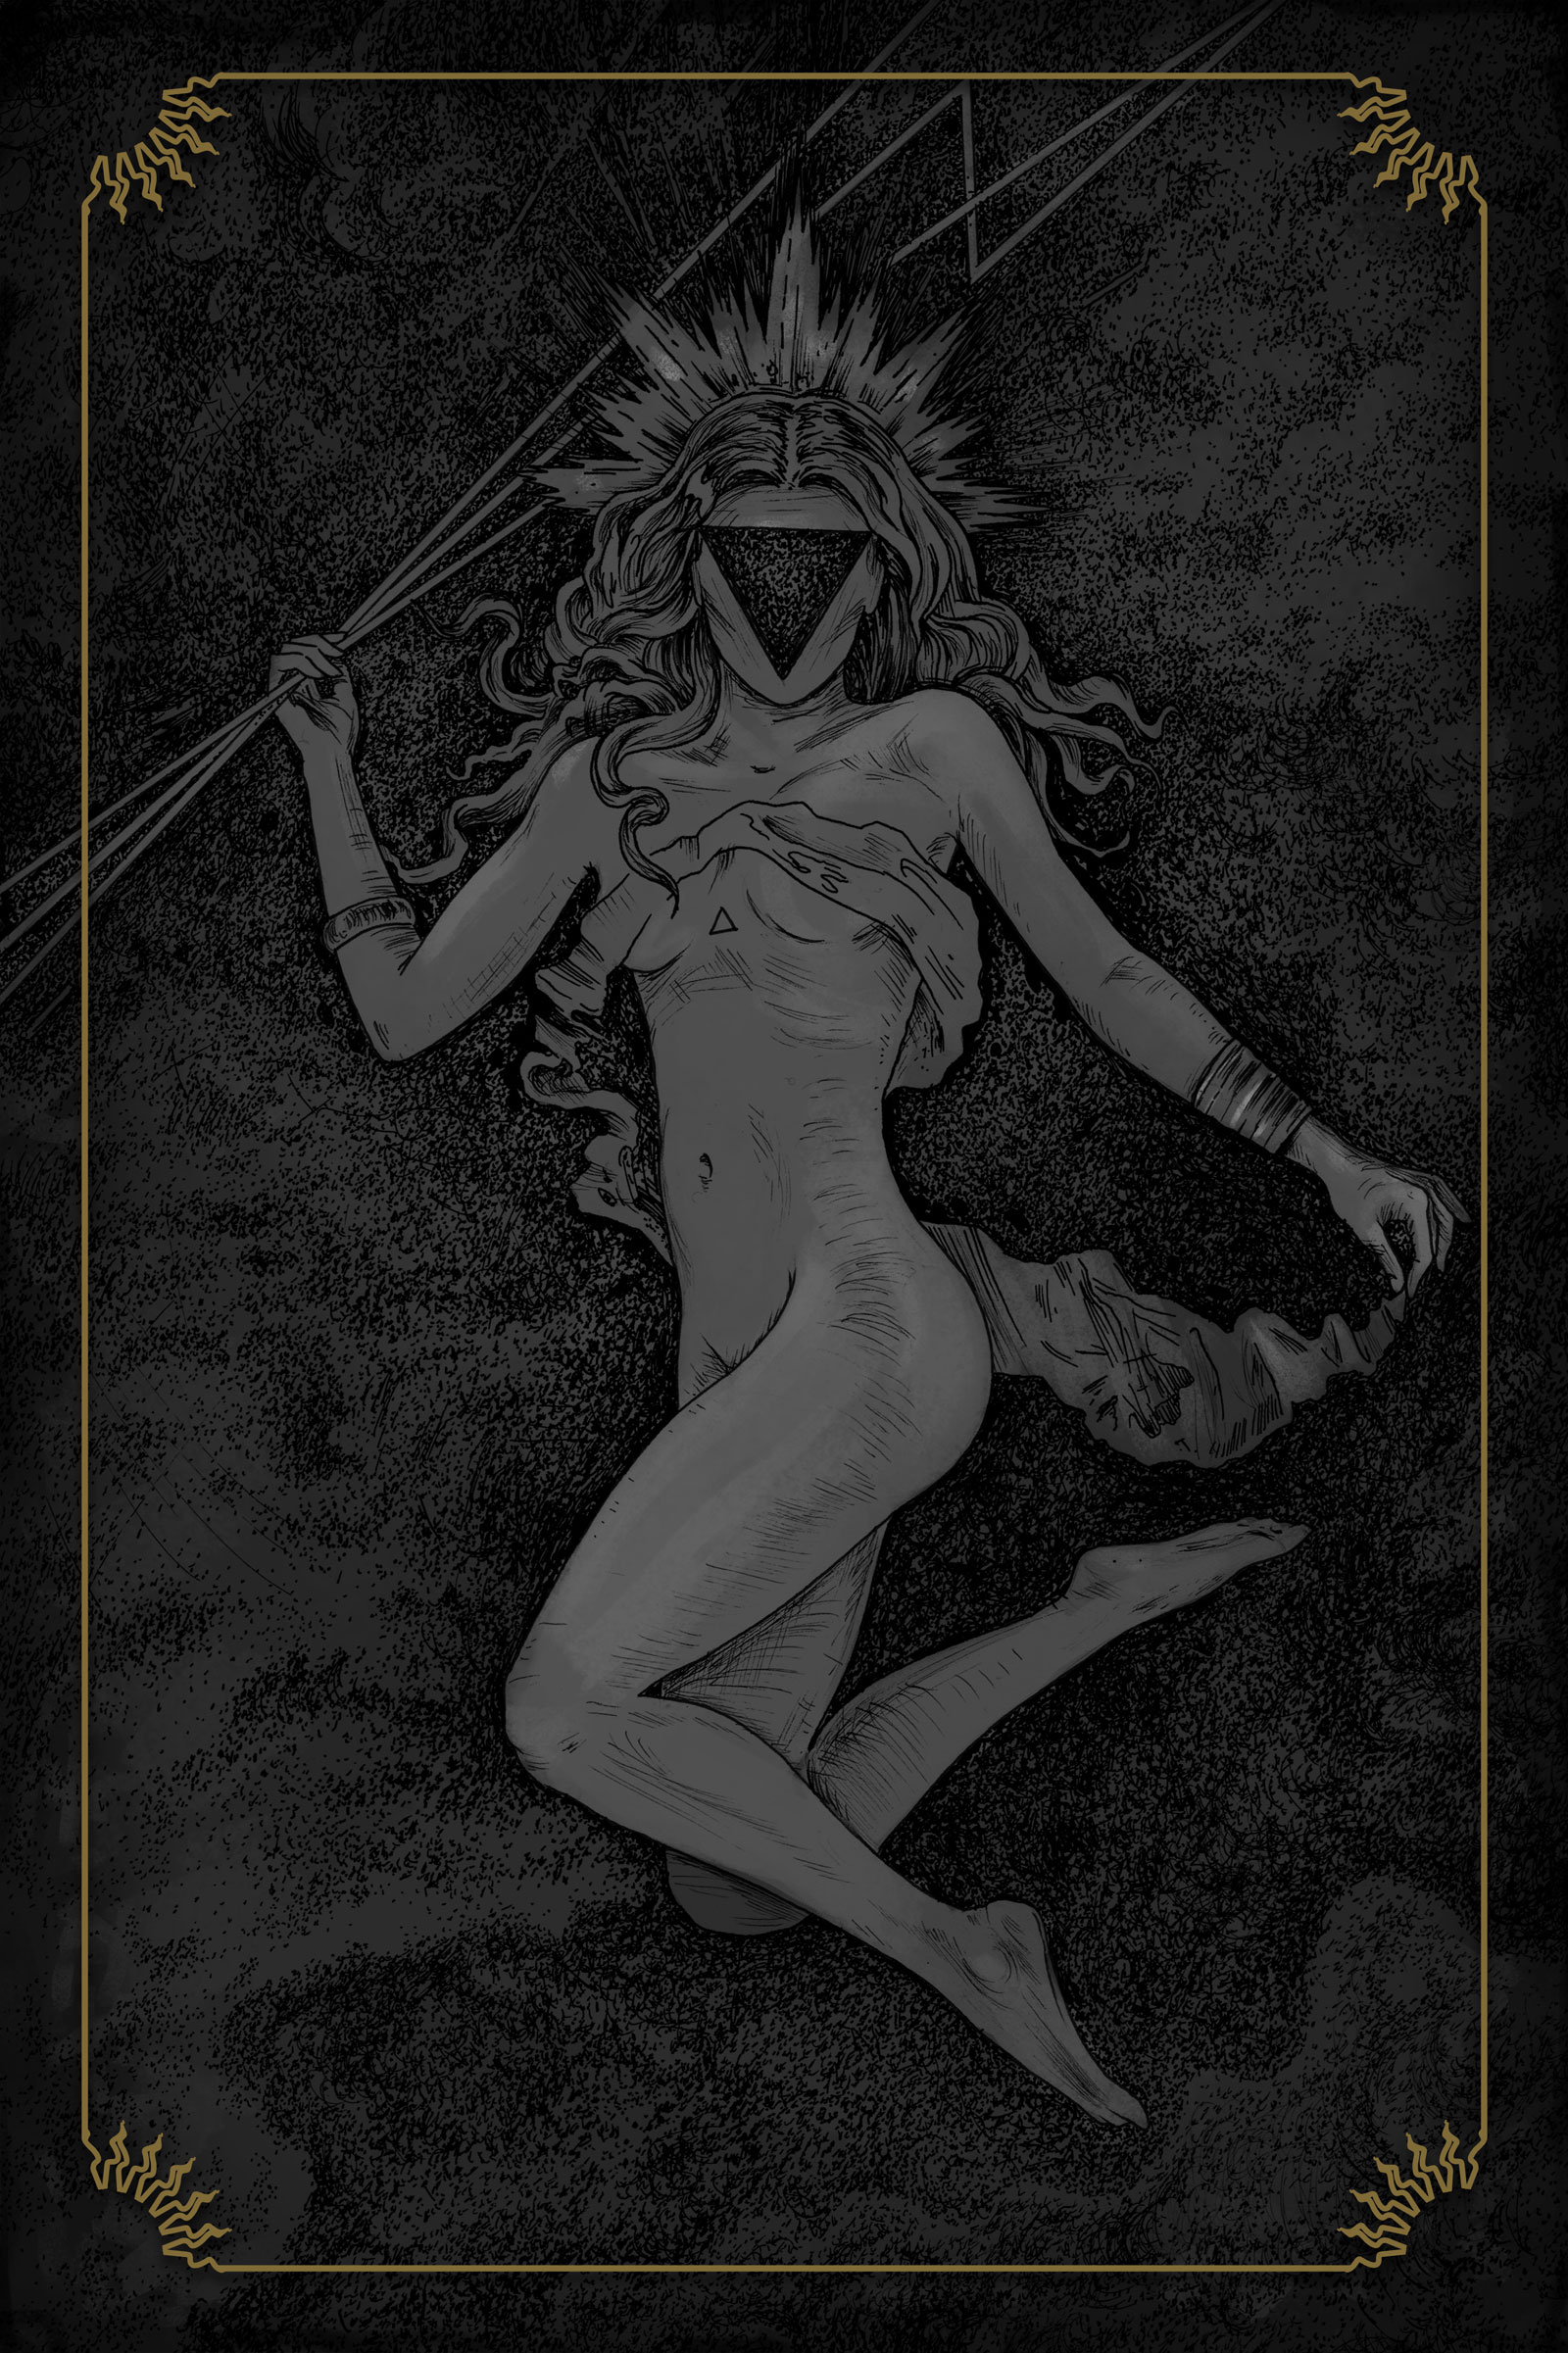 rysunek wrocław słońce bogini plakat metal rock ilustracja 2